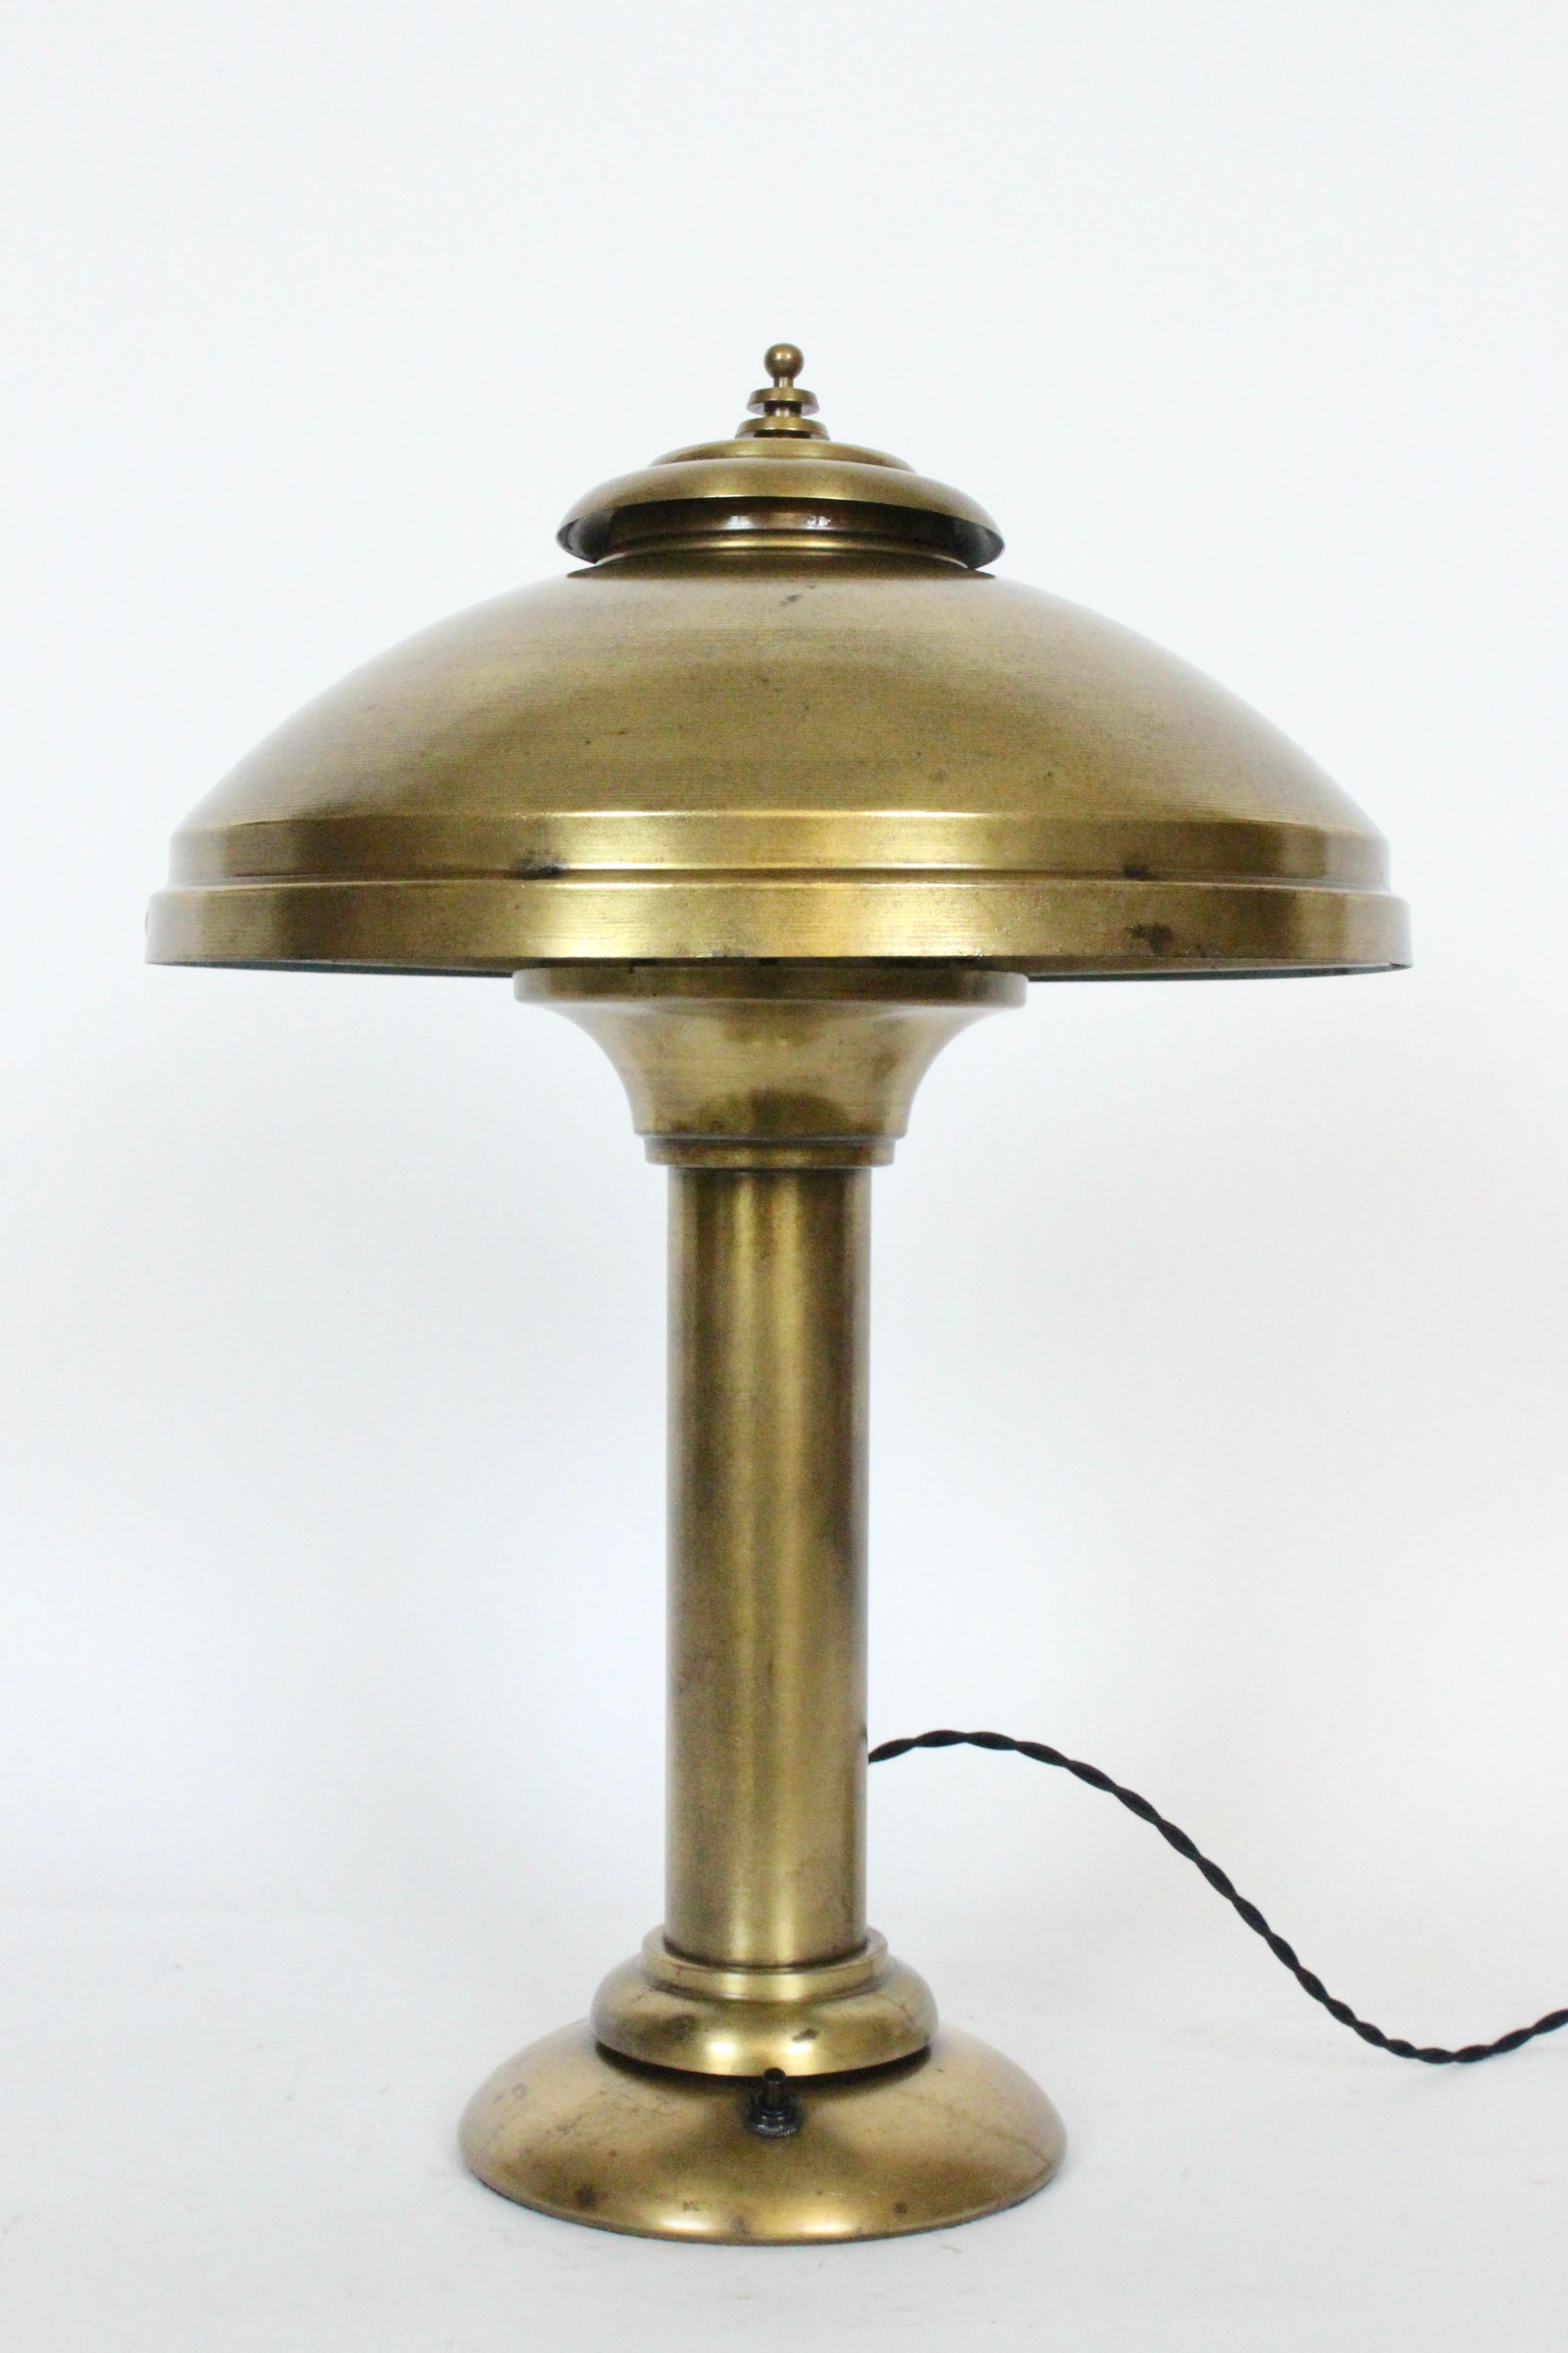 Enameled Fairies Mfg. Co. Brass Cantilever Desk Lamp, 1920s For Sale